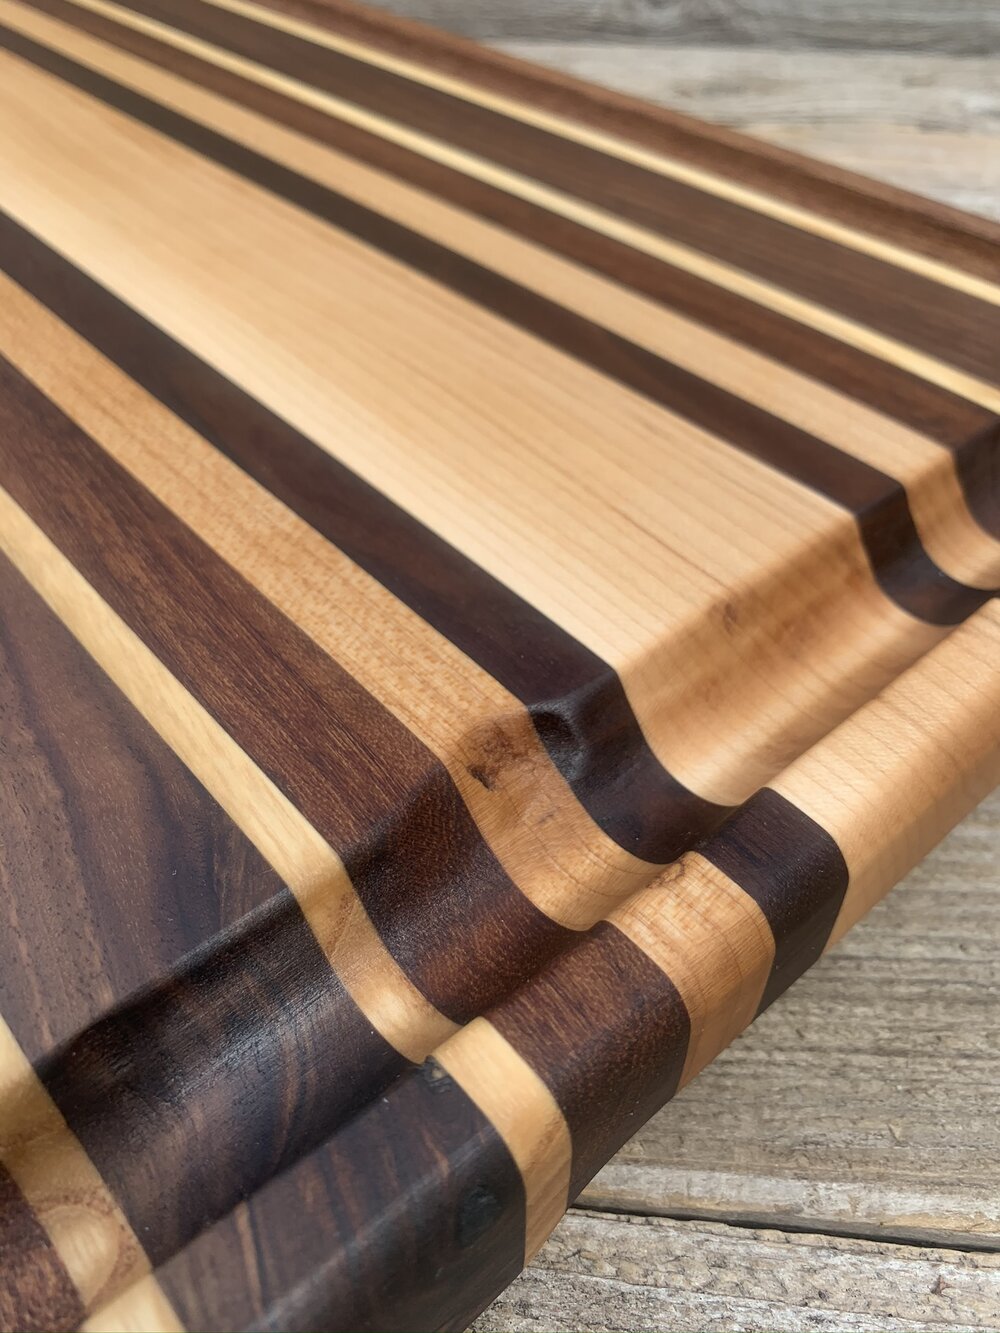 Cutting Board Stripe Multi Exotic Wood with Juice Groove Butcher Block Edge  Grain 011723